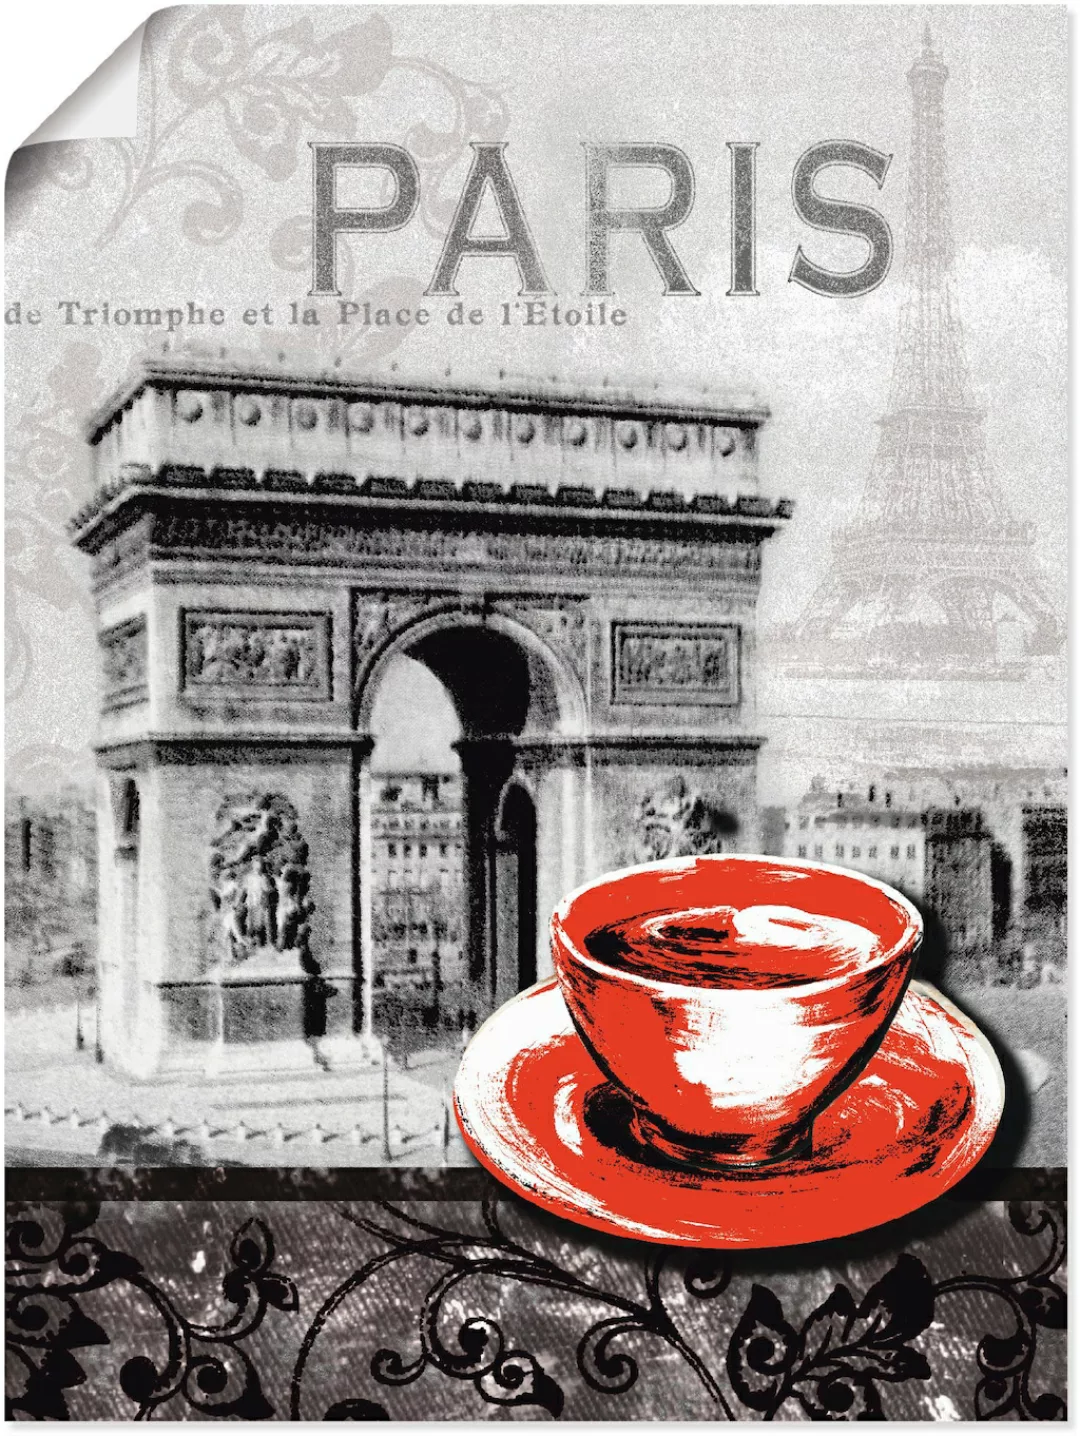 Artland Wandbild "Paris - Café au Lait - Milchkaffee", Gebäude, (1 St.), al günstig online kaufen